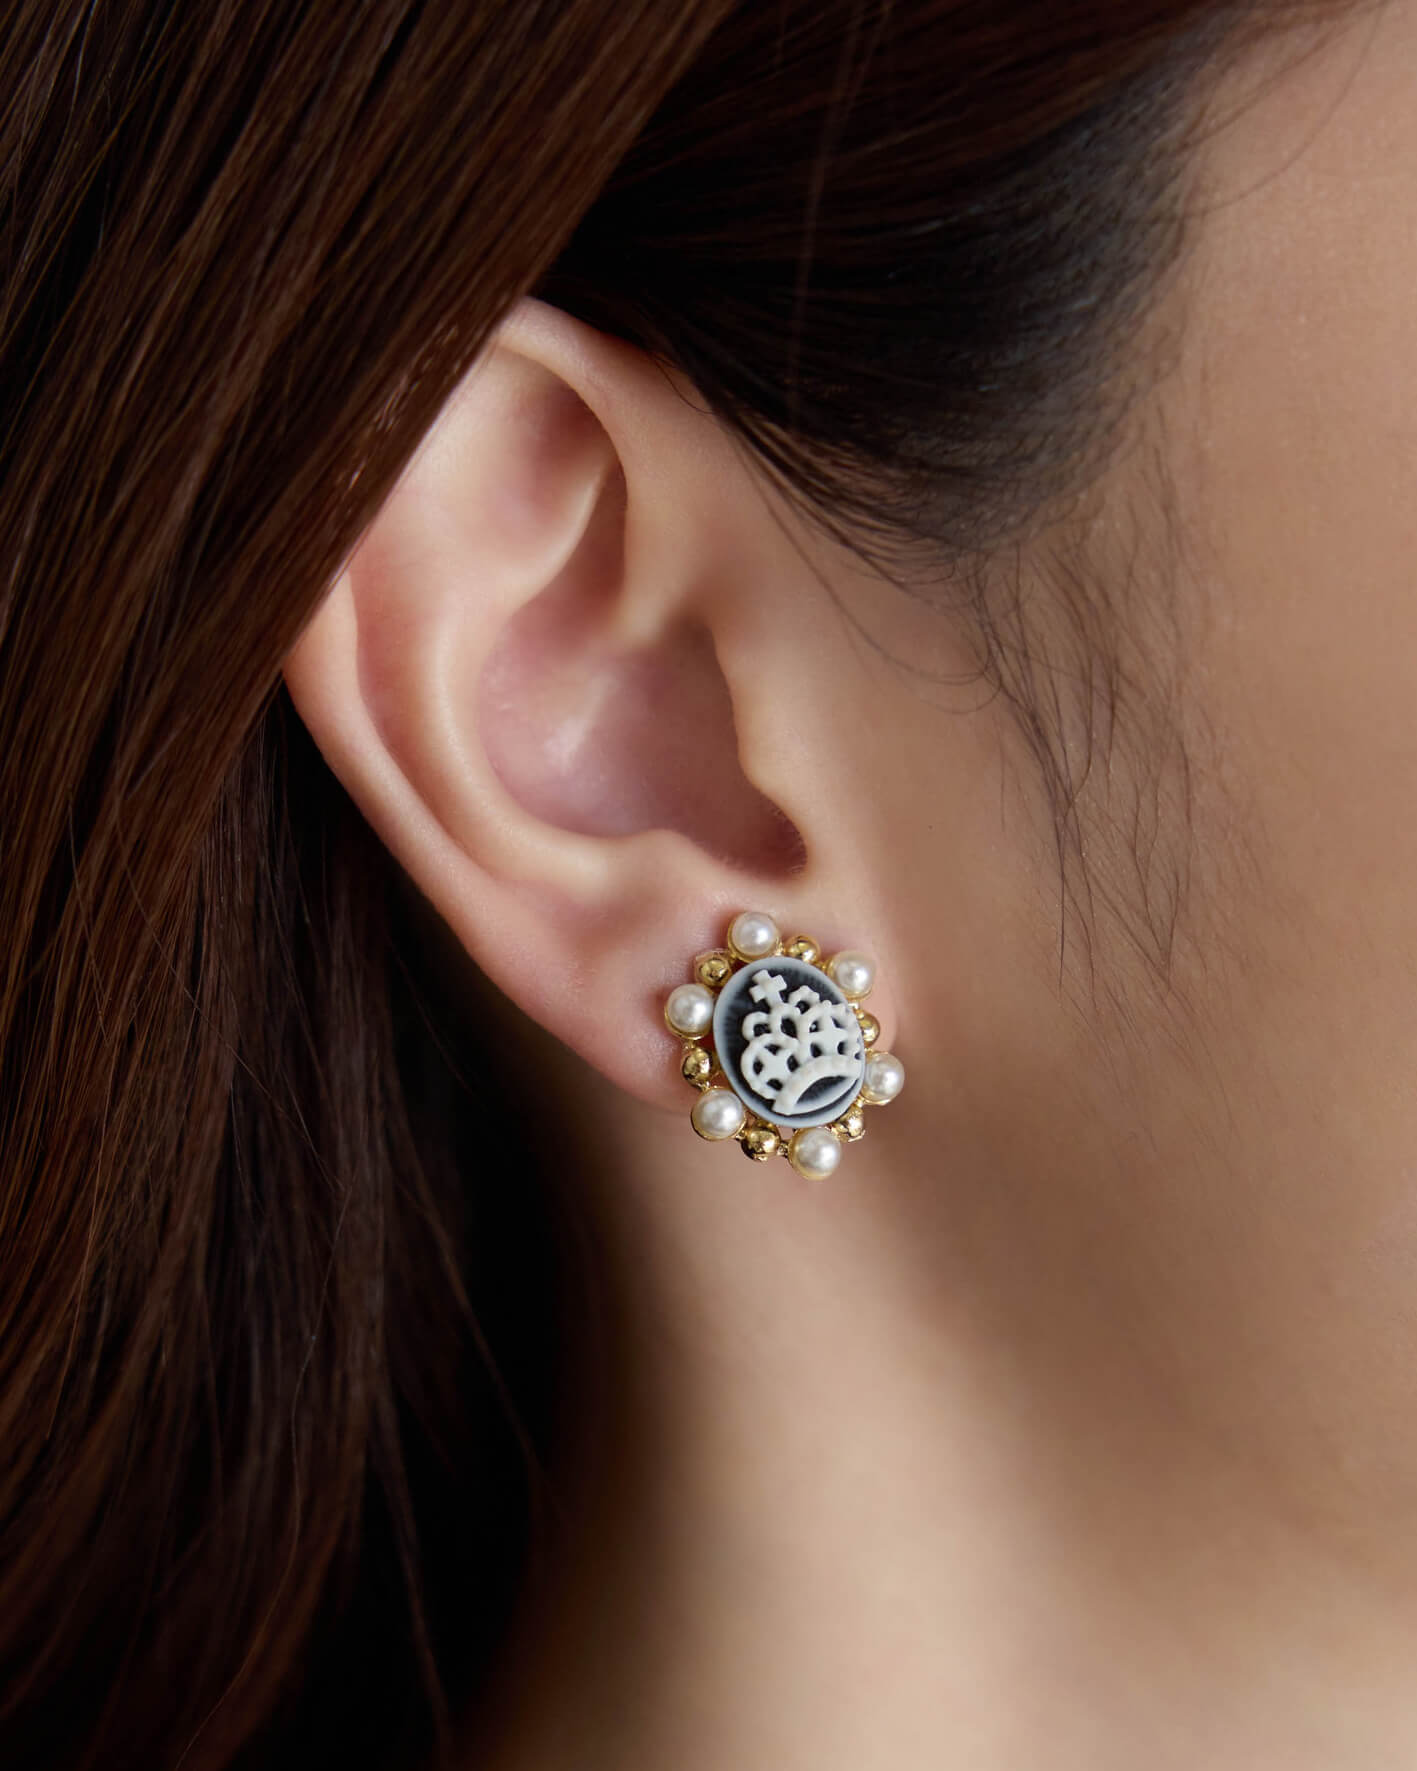 Eco安珂,韓國飾品,韓國耳環,浮雕耳環,垂墜耳環,螺旋夾耳環,可調式耳夾耳環,螺旋夾垂墜耳環